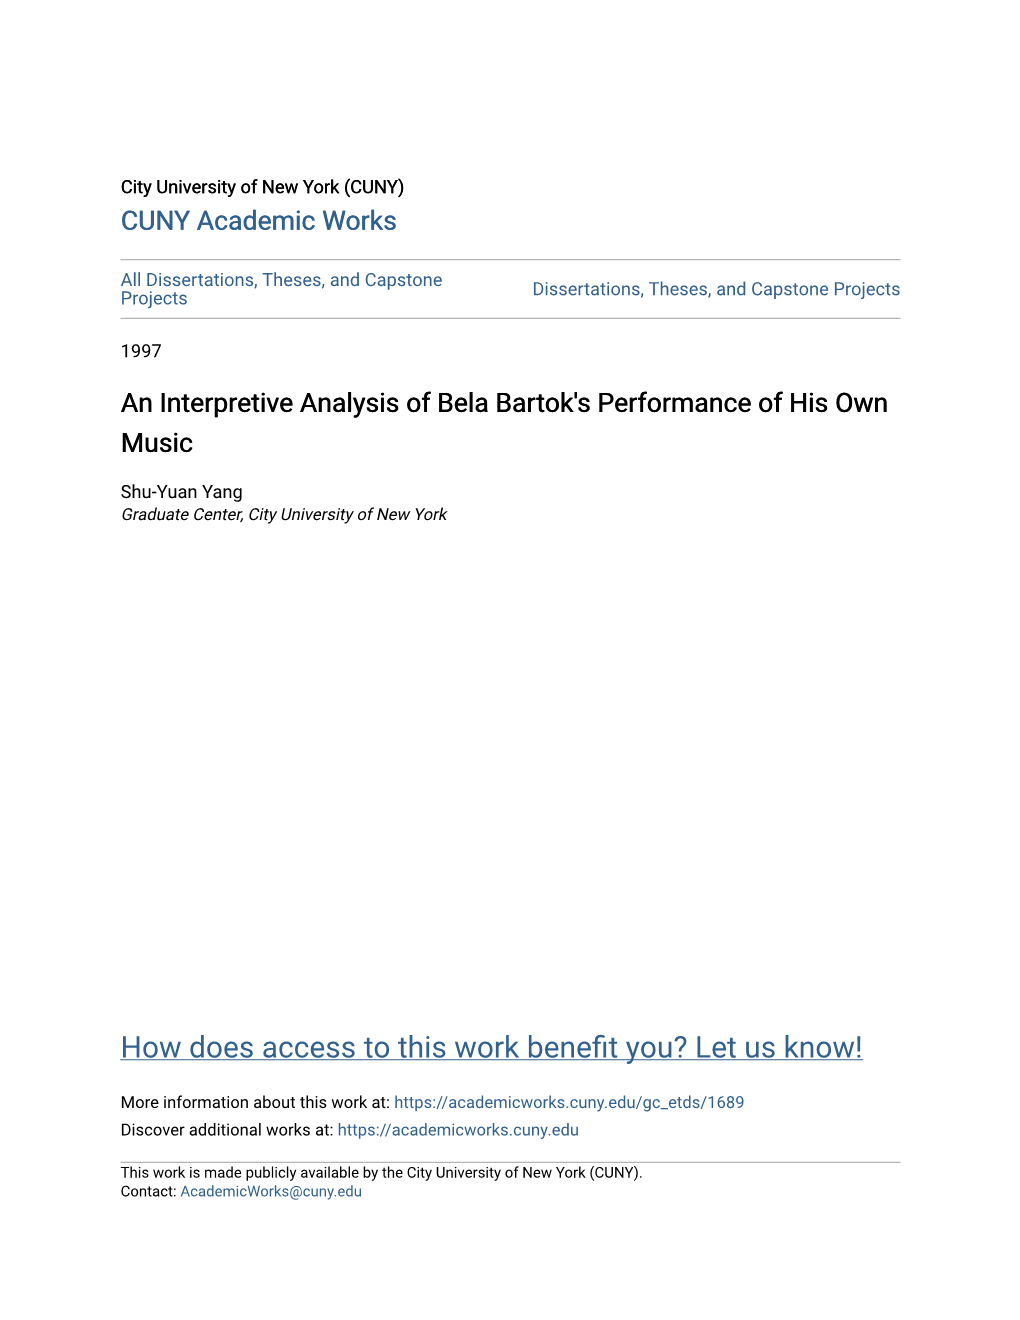 An Interpretive Analysis of Bela Bartok's Performance of His Own Music